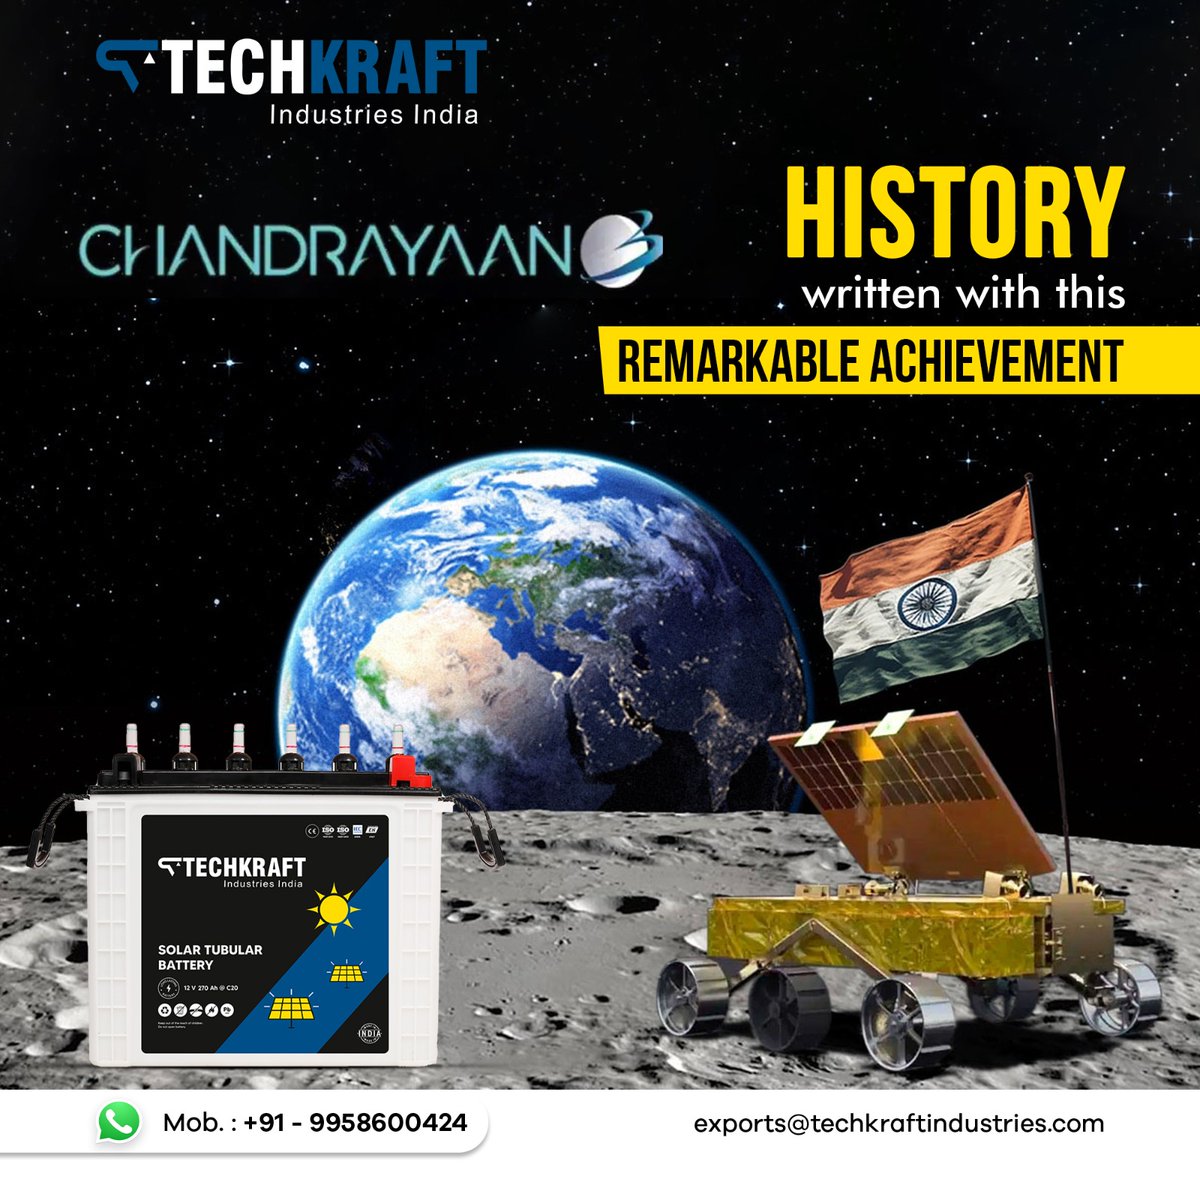 𝐓𝐞𝐜𝐡𝐤𝐫𝐚𝐟𝐭 𝐞𝐱𝐭𝐞𝐧𝐝𝐬 𝐚 𝐜𝐨𝐬𝐦𝐢𝐜 𝐜𝐨𝐧𝐠𝐫𝐚𝐭𝐮𝐥𝐚𝐭𝐢𝐨𝐧 𝐭𝐨 𝐈𝐧𝐝𝐢𝐚 𝐨𝐧 𝐭𝐡𝐞 𝐟𝐥𝐚𝐰𝐥𝐞𝐬𝐬 𝐥𝐚𝐧𝐝𝐢𝐧𝐠 𝐨𝐟 𝐂𝐡𝐚𝐧𝐝𝐫𝐚𝐲𝐚𝐚𝐧 3! 🌙🚀 . . #techkraftbatteries #Chandrayaan3 #LunarSuccess #ProudMoment #ISRO #IndiaOnTheMoon #moon @isro